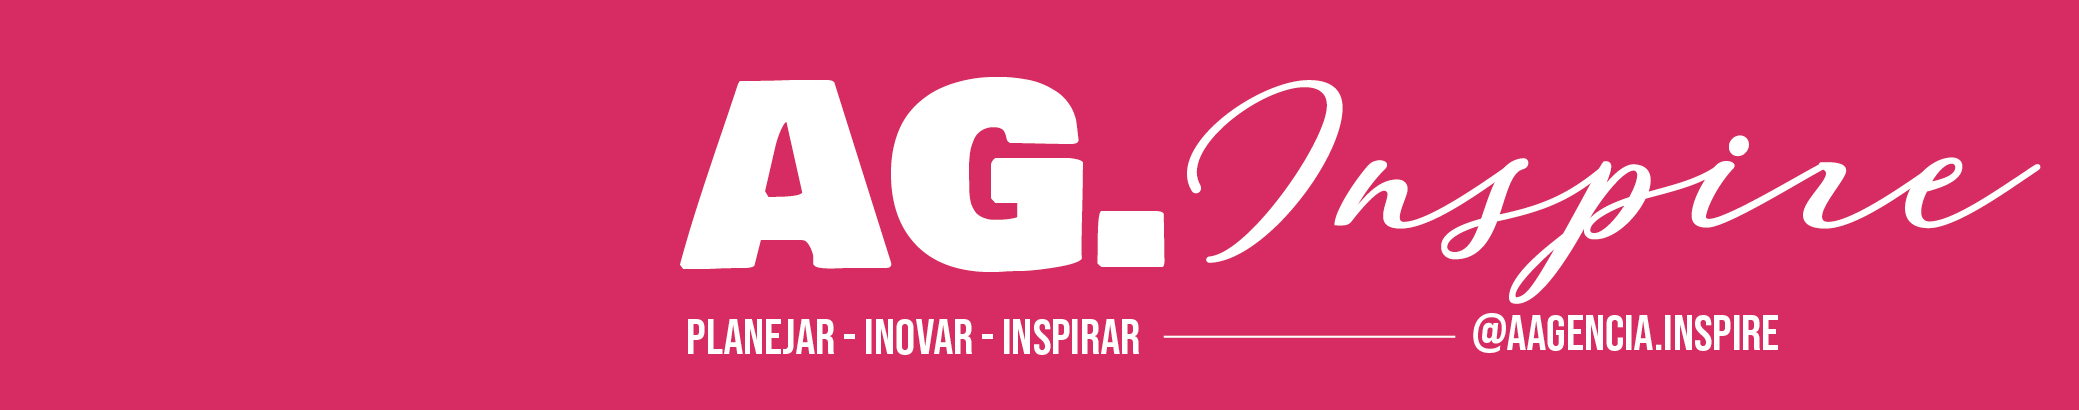 Profielbanner van Agência Inspire